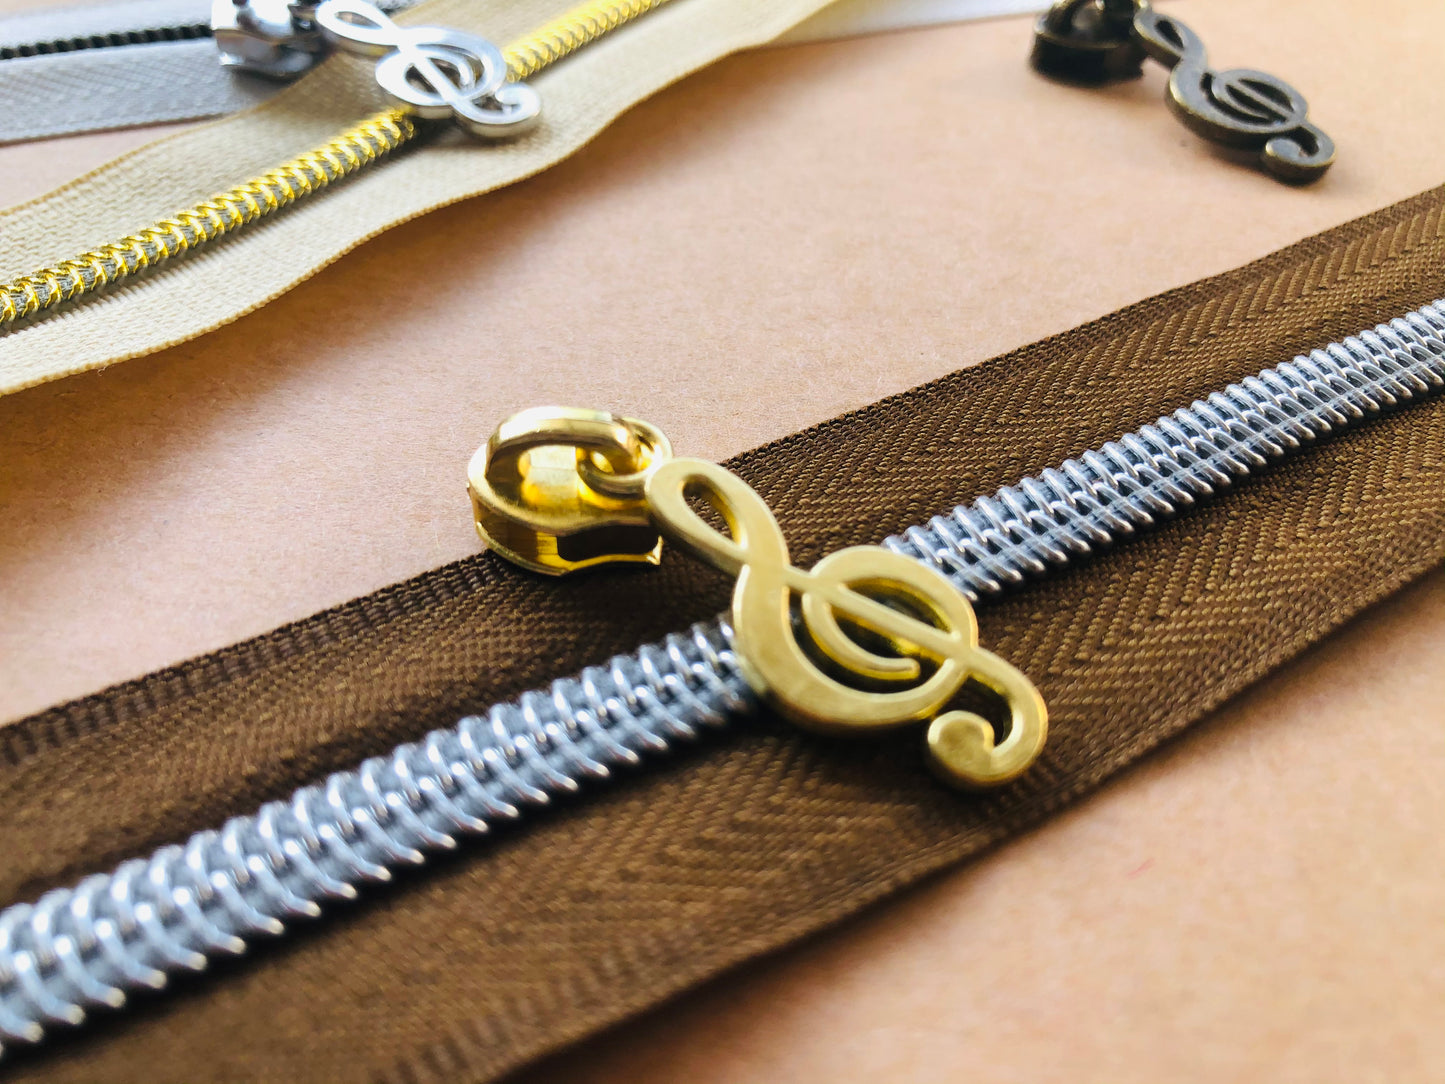 Music note zipper pulls, Size 5 zipper pulls for nylon zipper tapes, zipper pulls in antique brass, sliver, gold, rose gold, gun metal